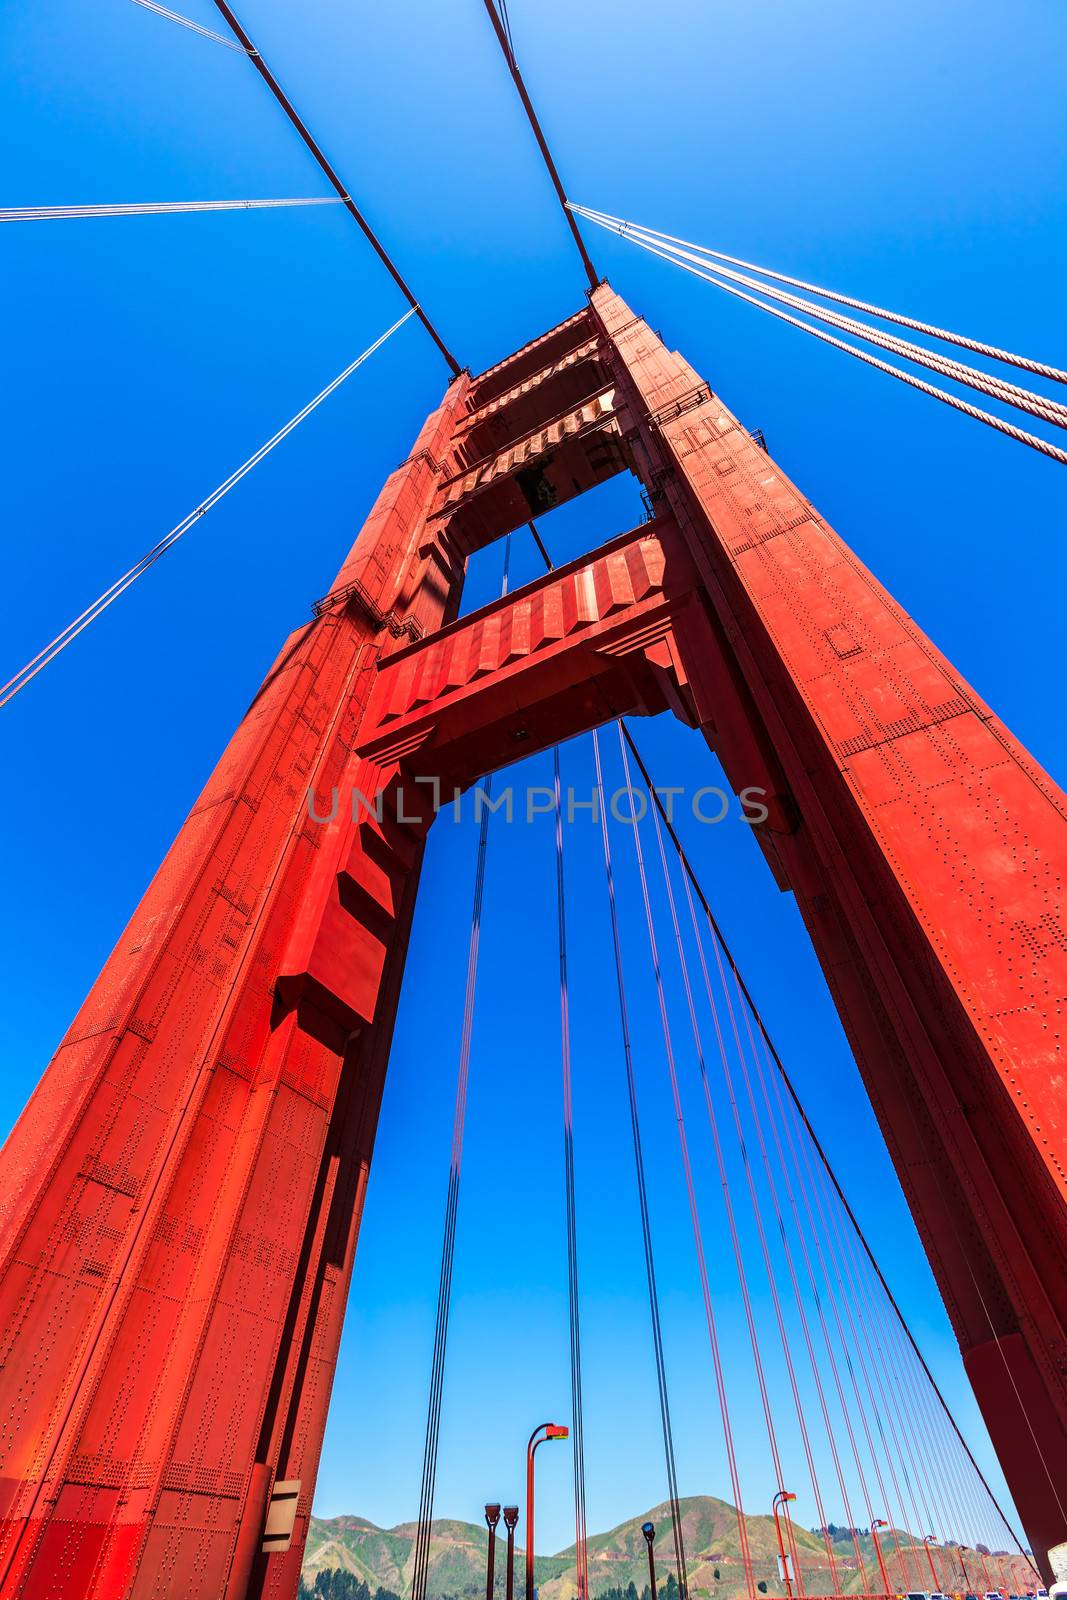 Golden Gate Bridge details in San Francisco California USA